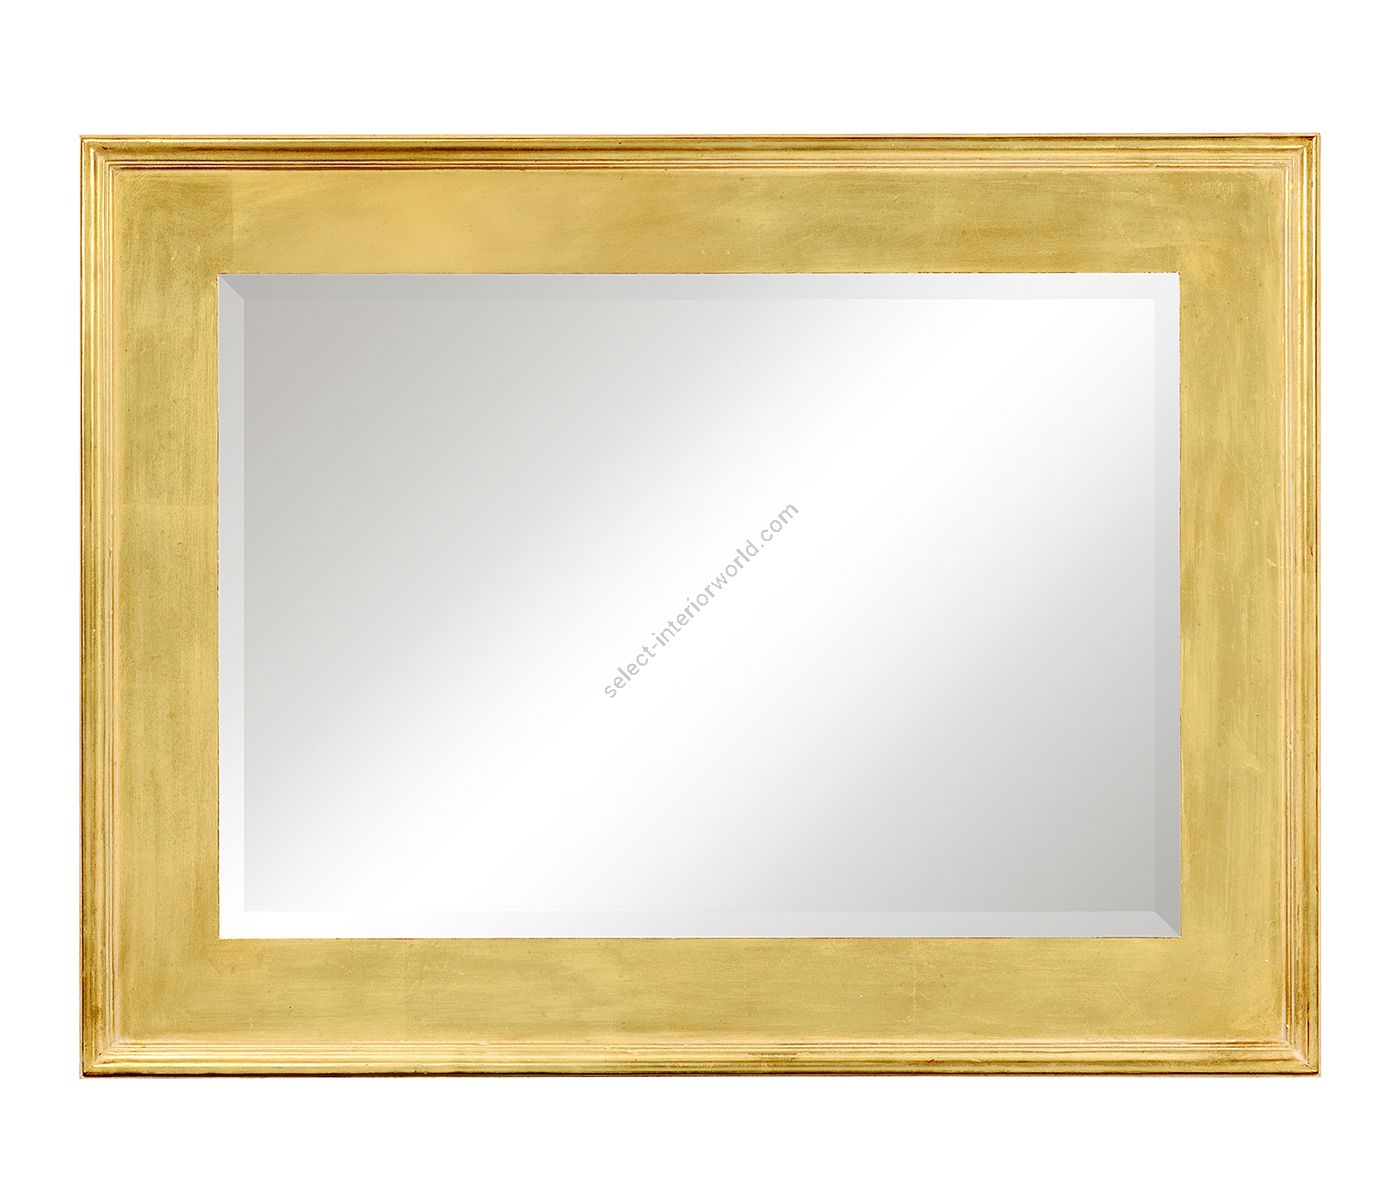 Jonathan Charles / Rectangular Gold Leaf Mirror / 494461-GIL